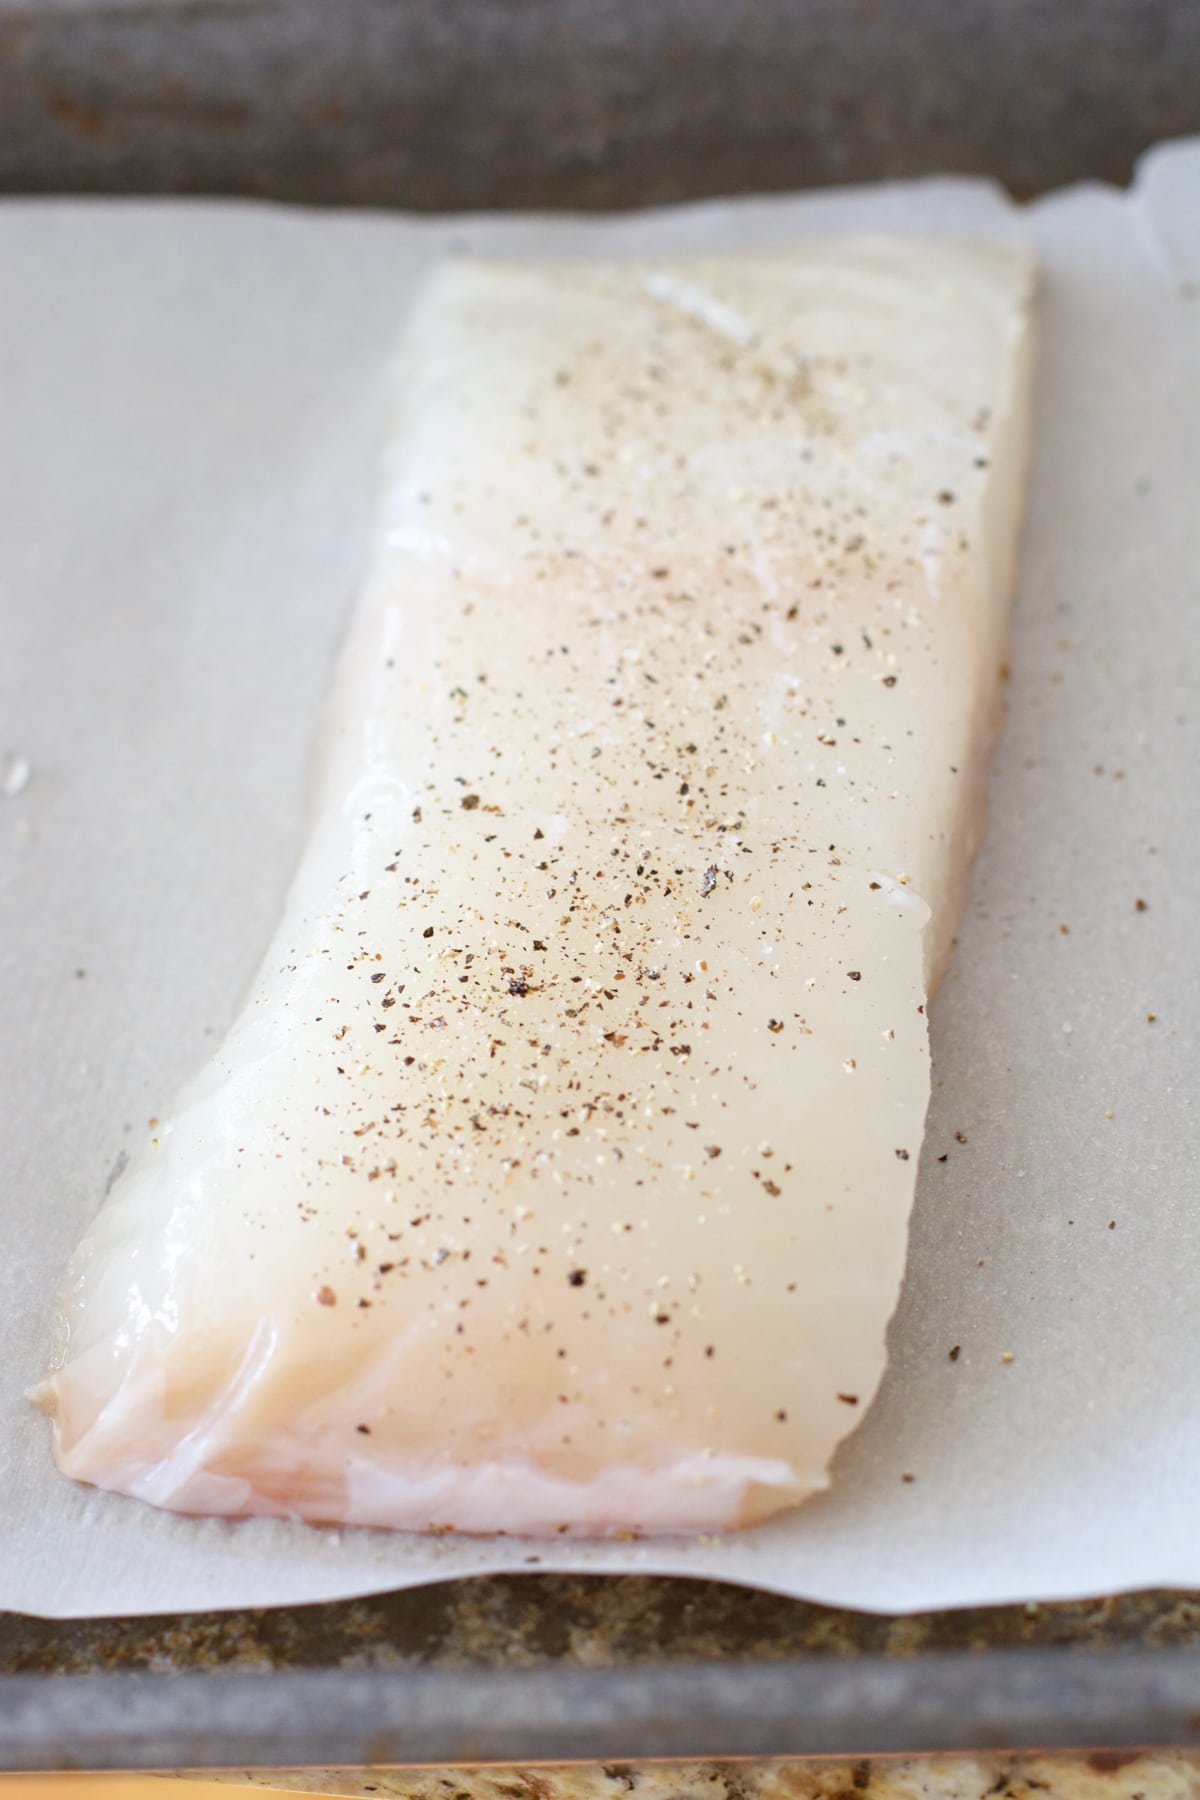 A raw halibut fillet on a piece of parchment paper. 